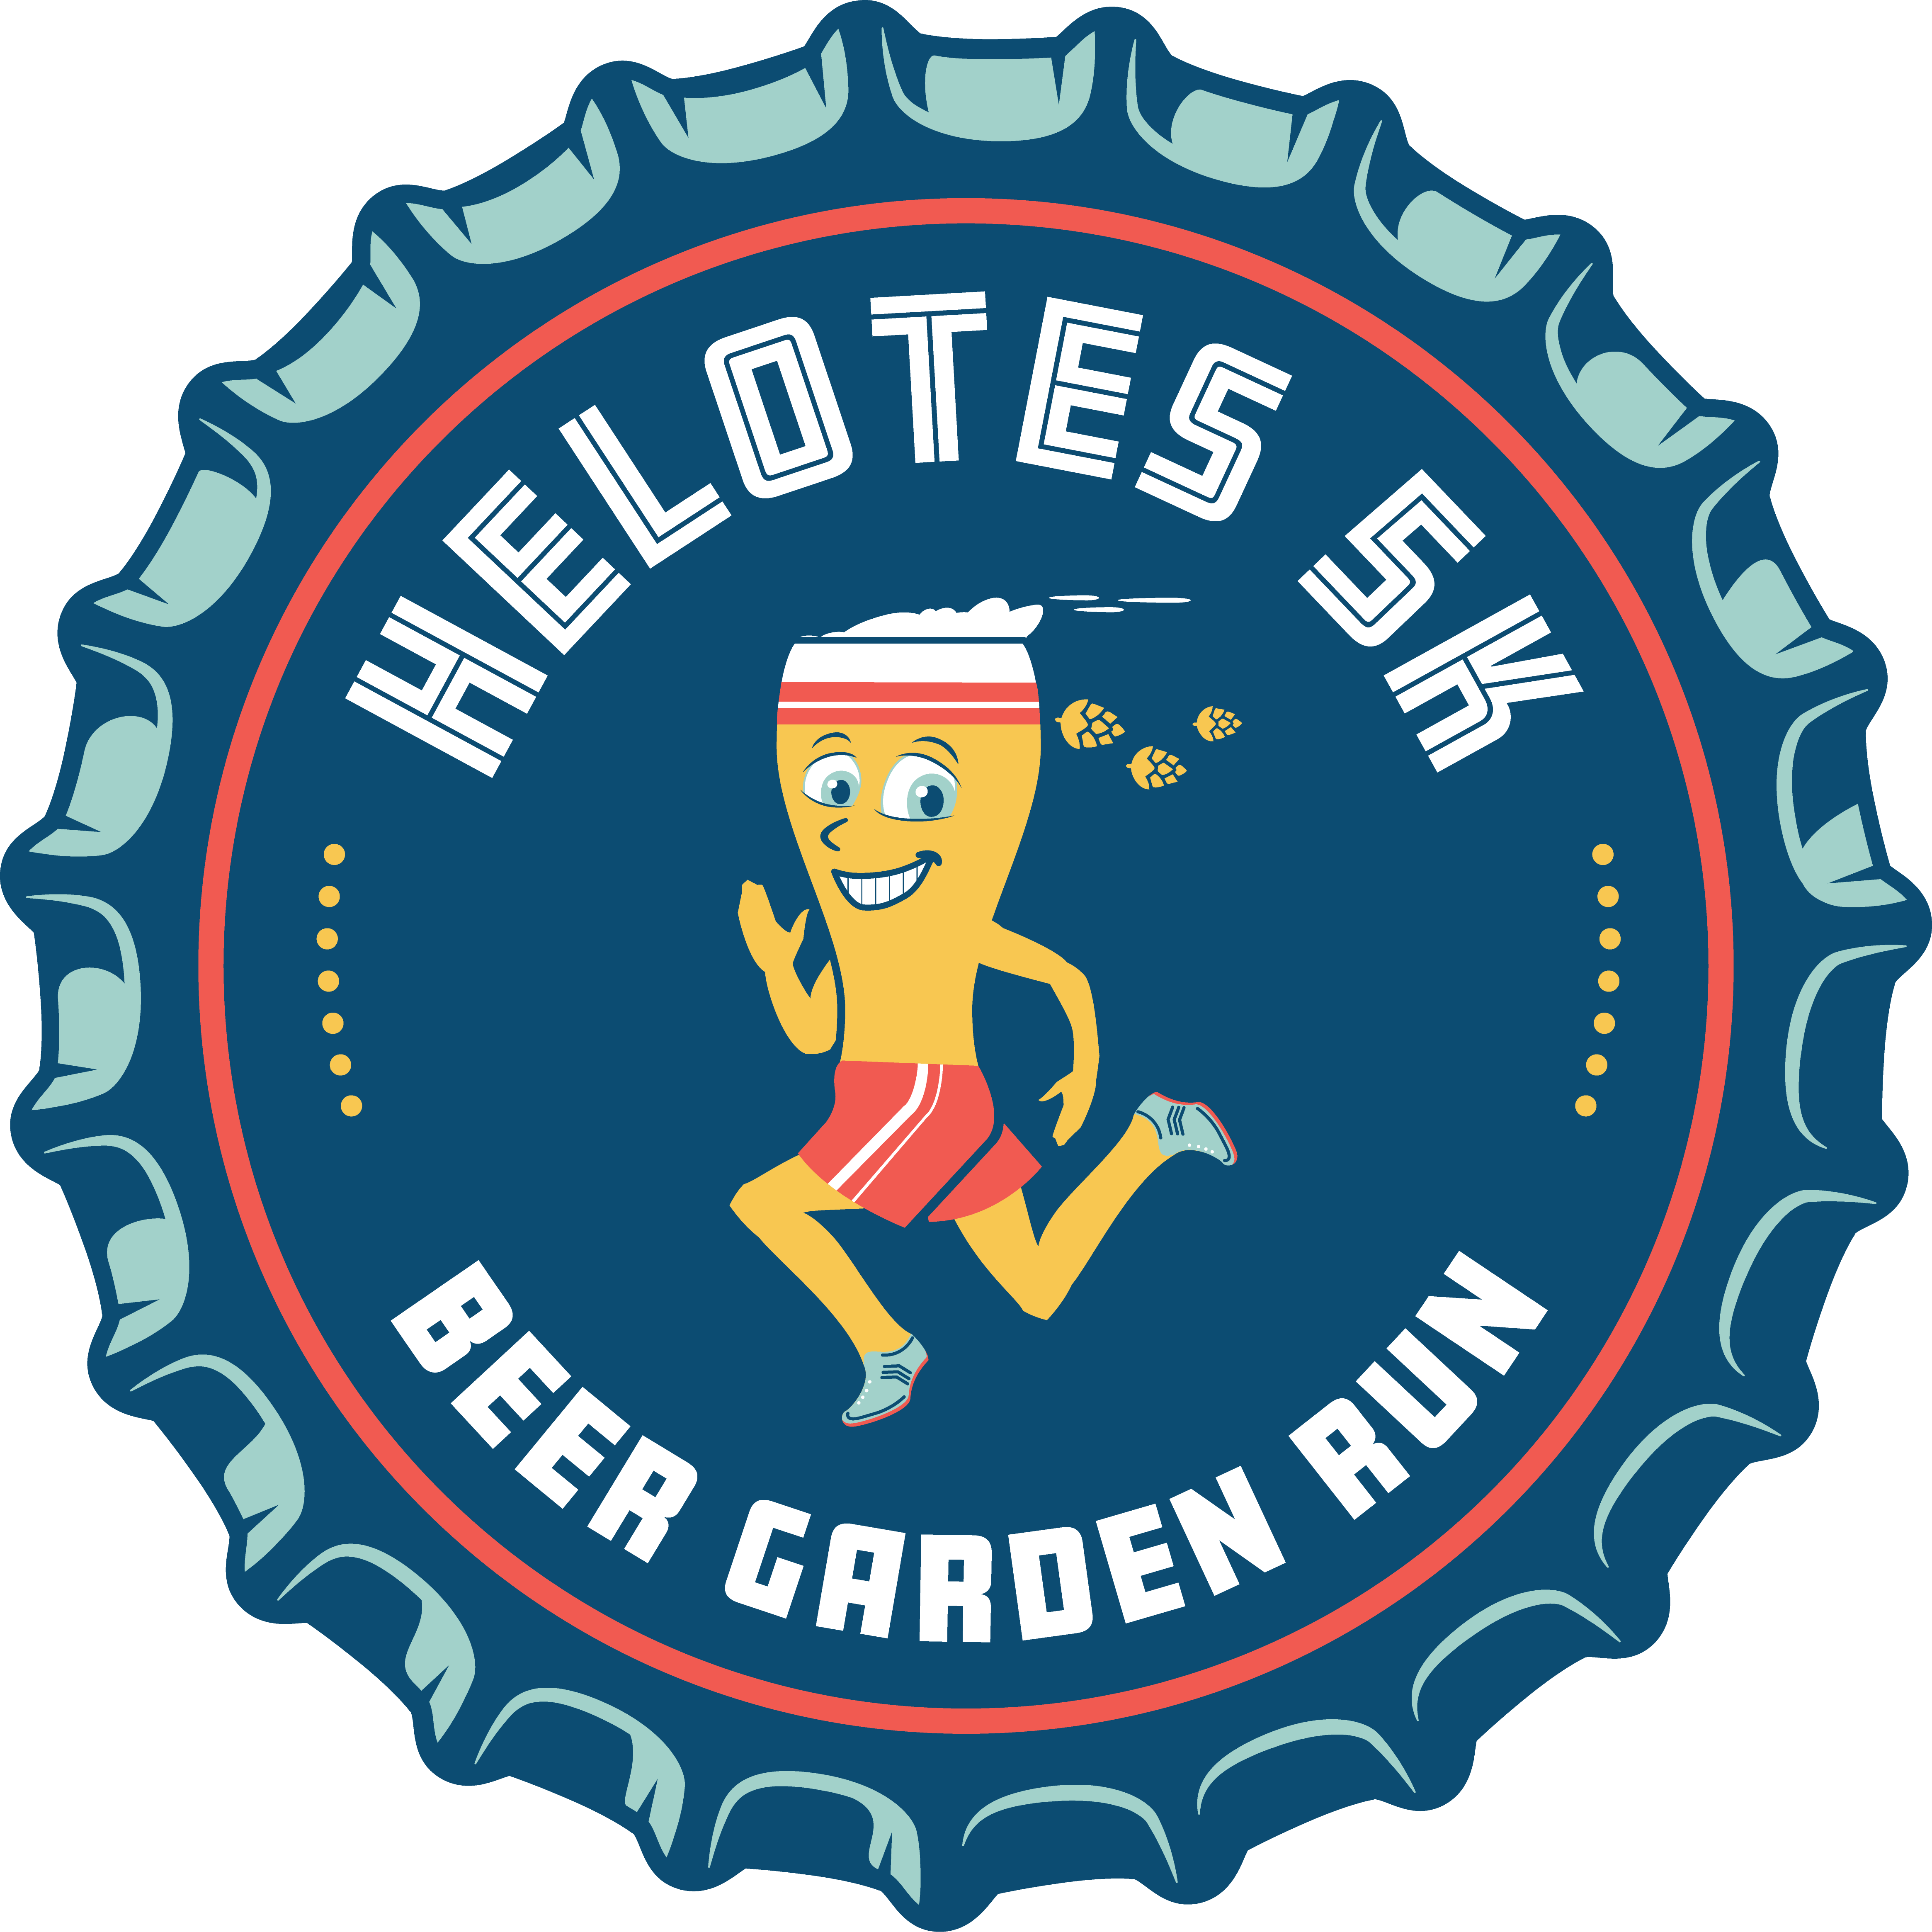 Helotes Beer Garden Run logo on RaceRaves